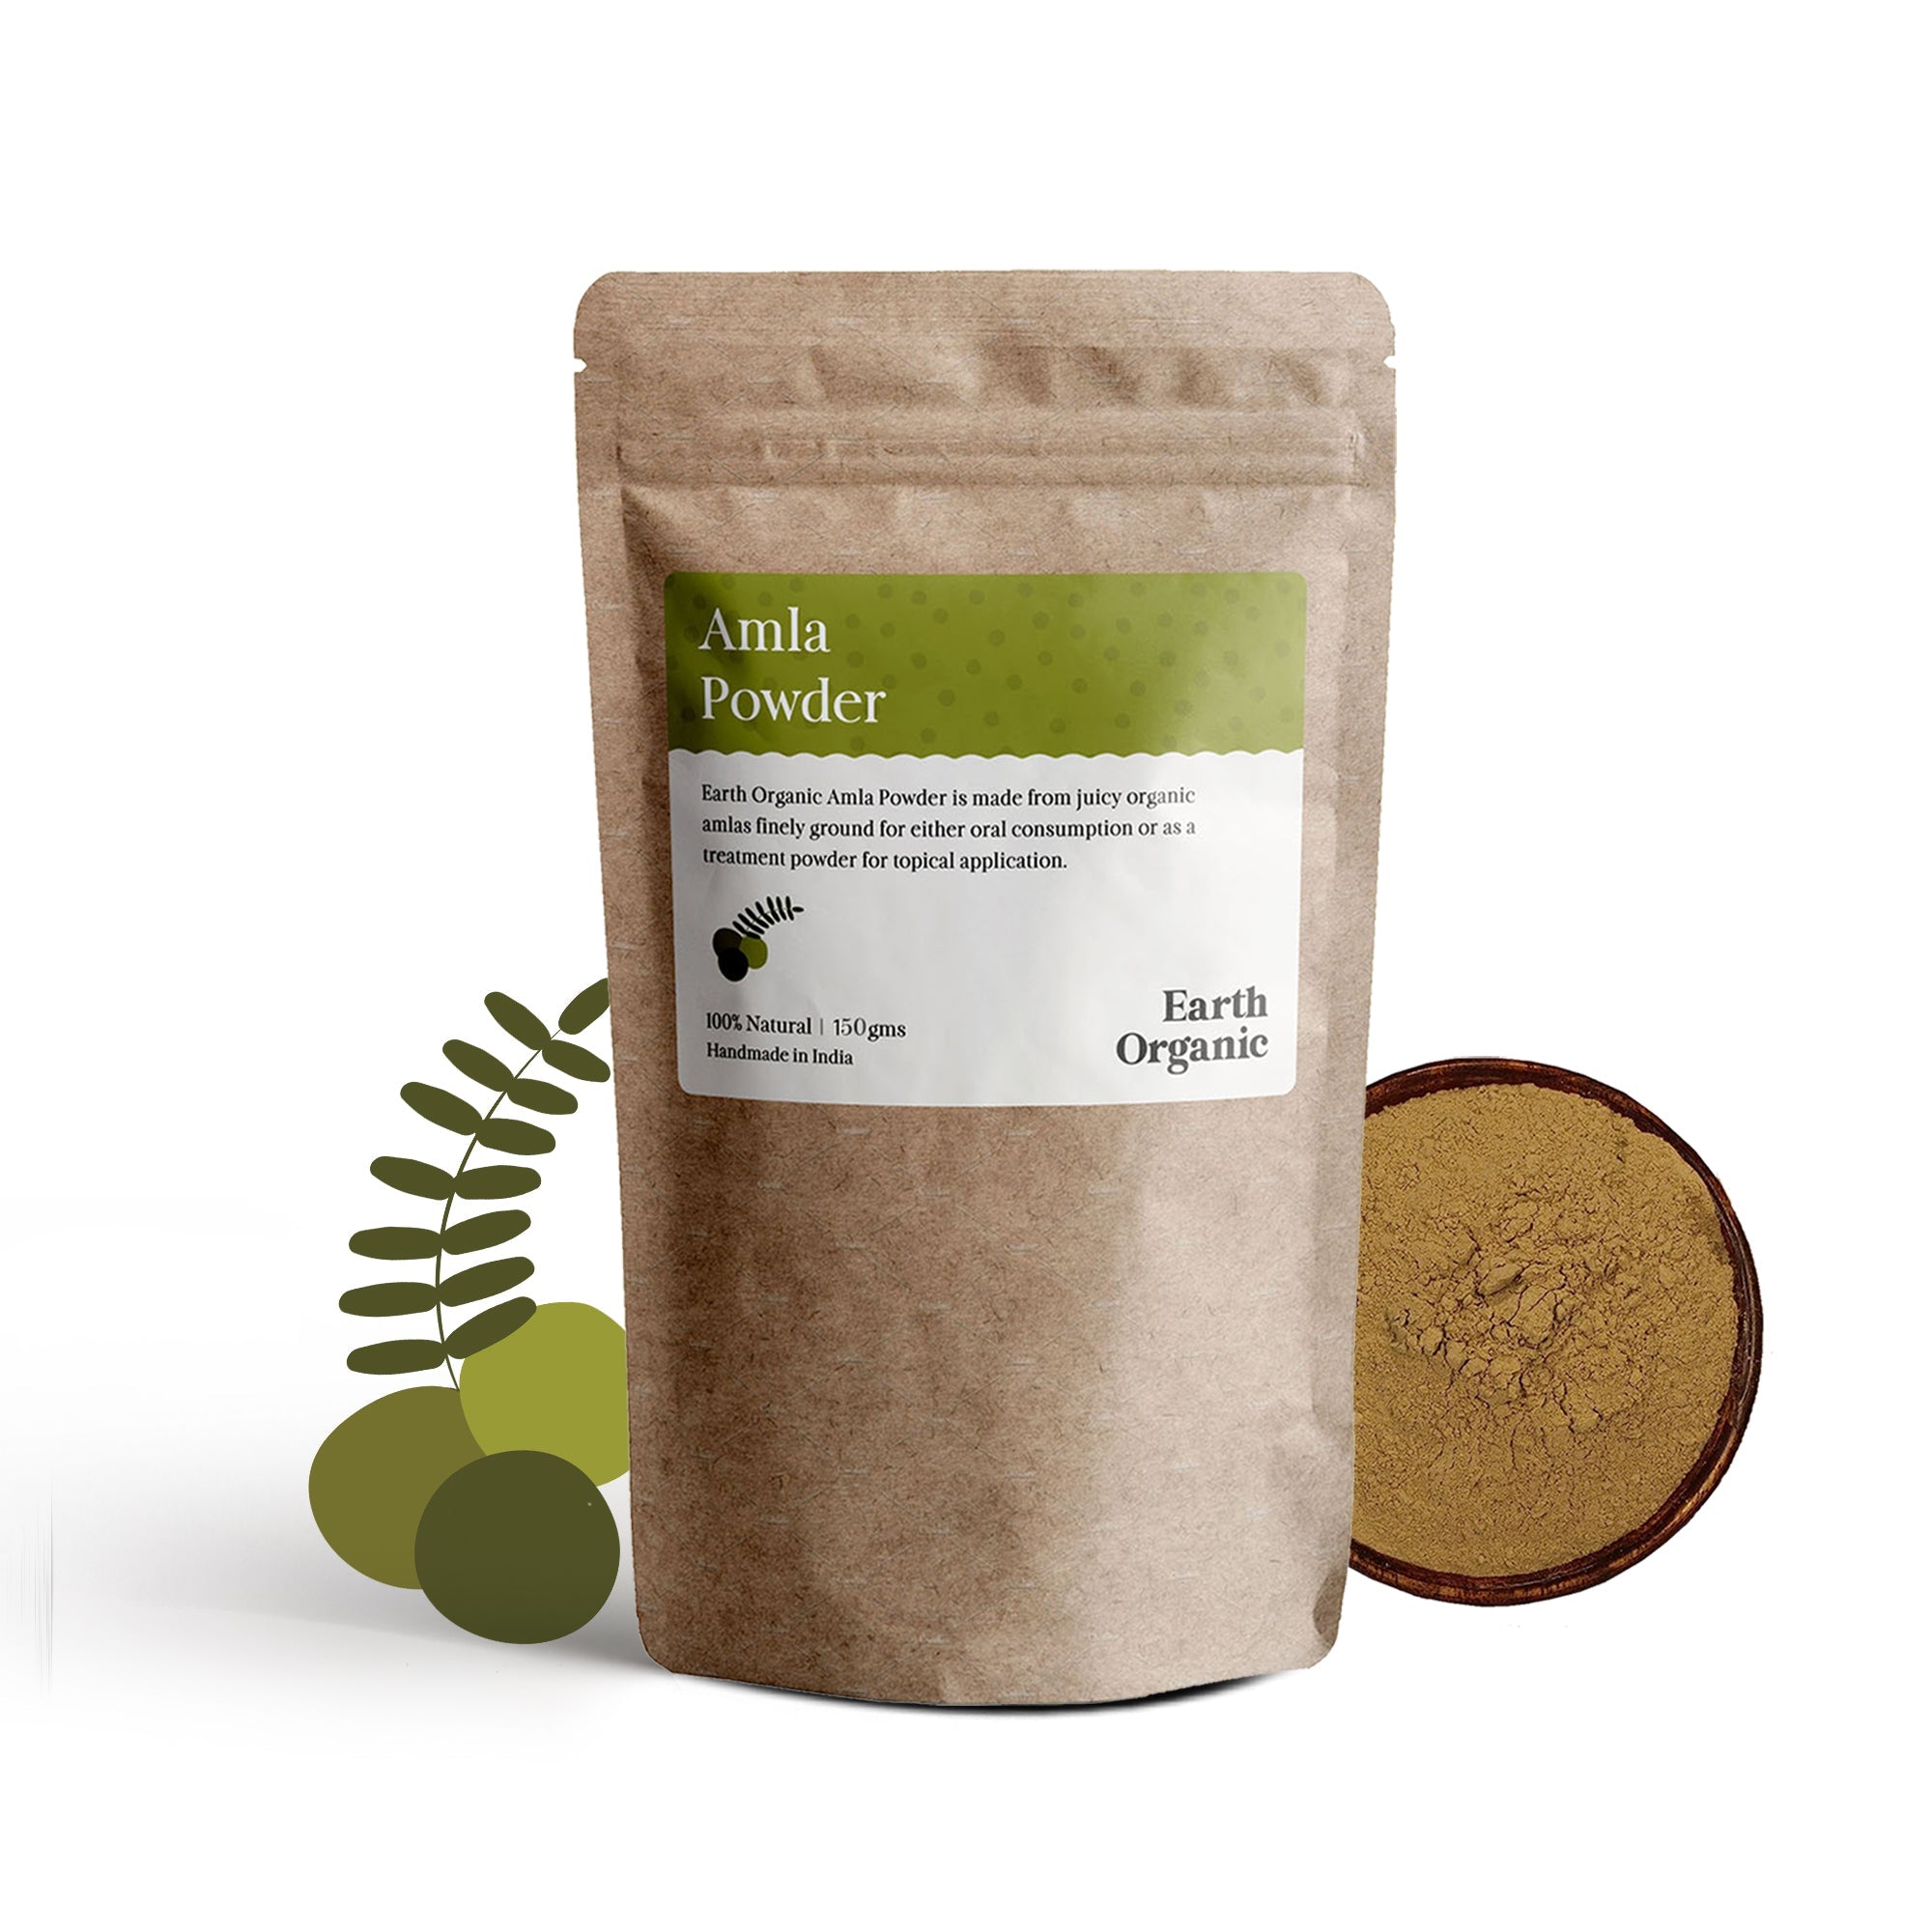 Indian Gooseberry Powder - The Earth Organic